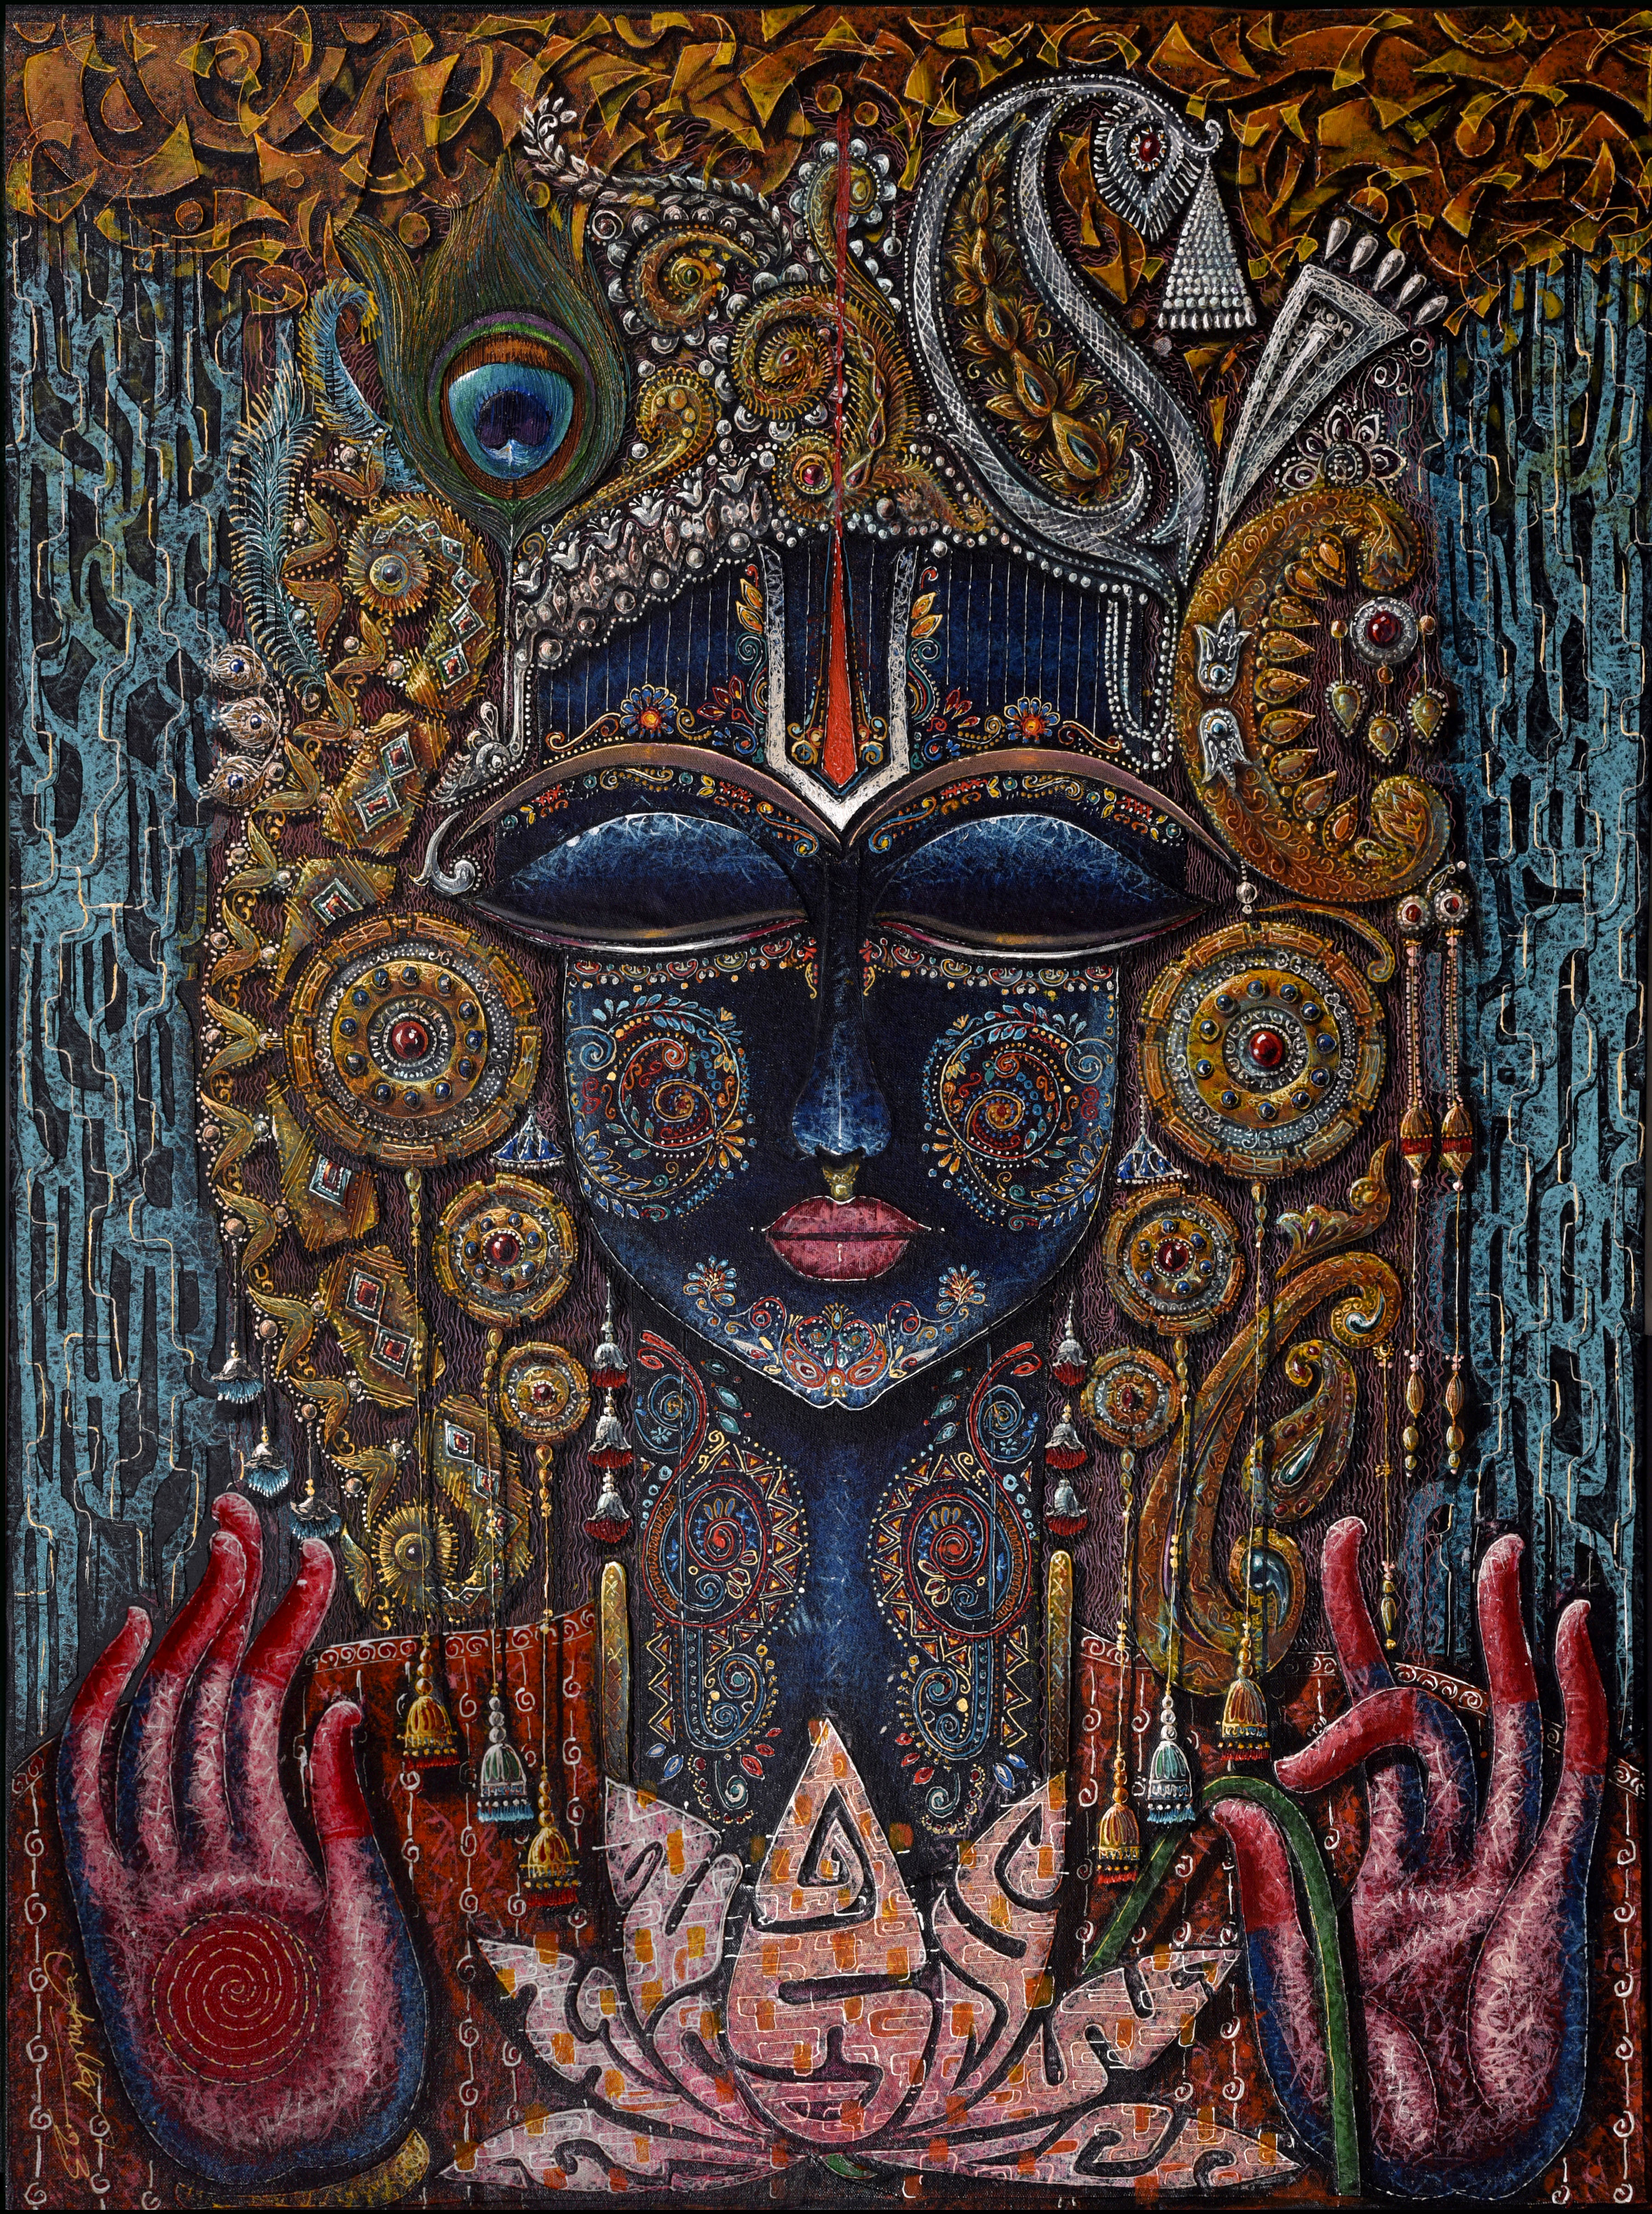 Krishna with Lotus II